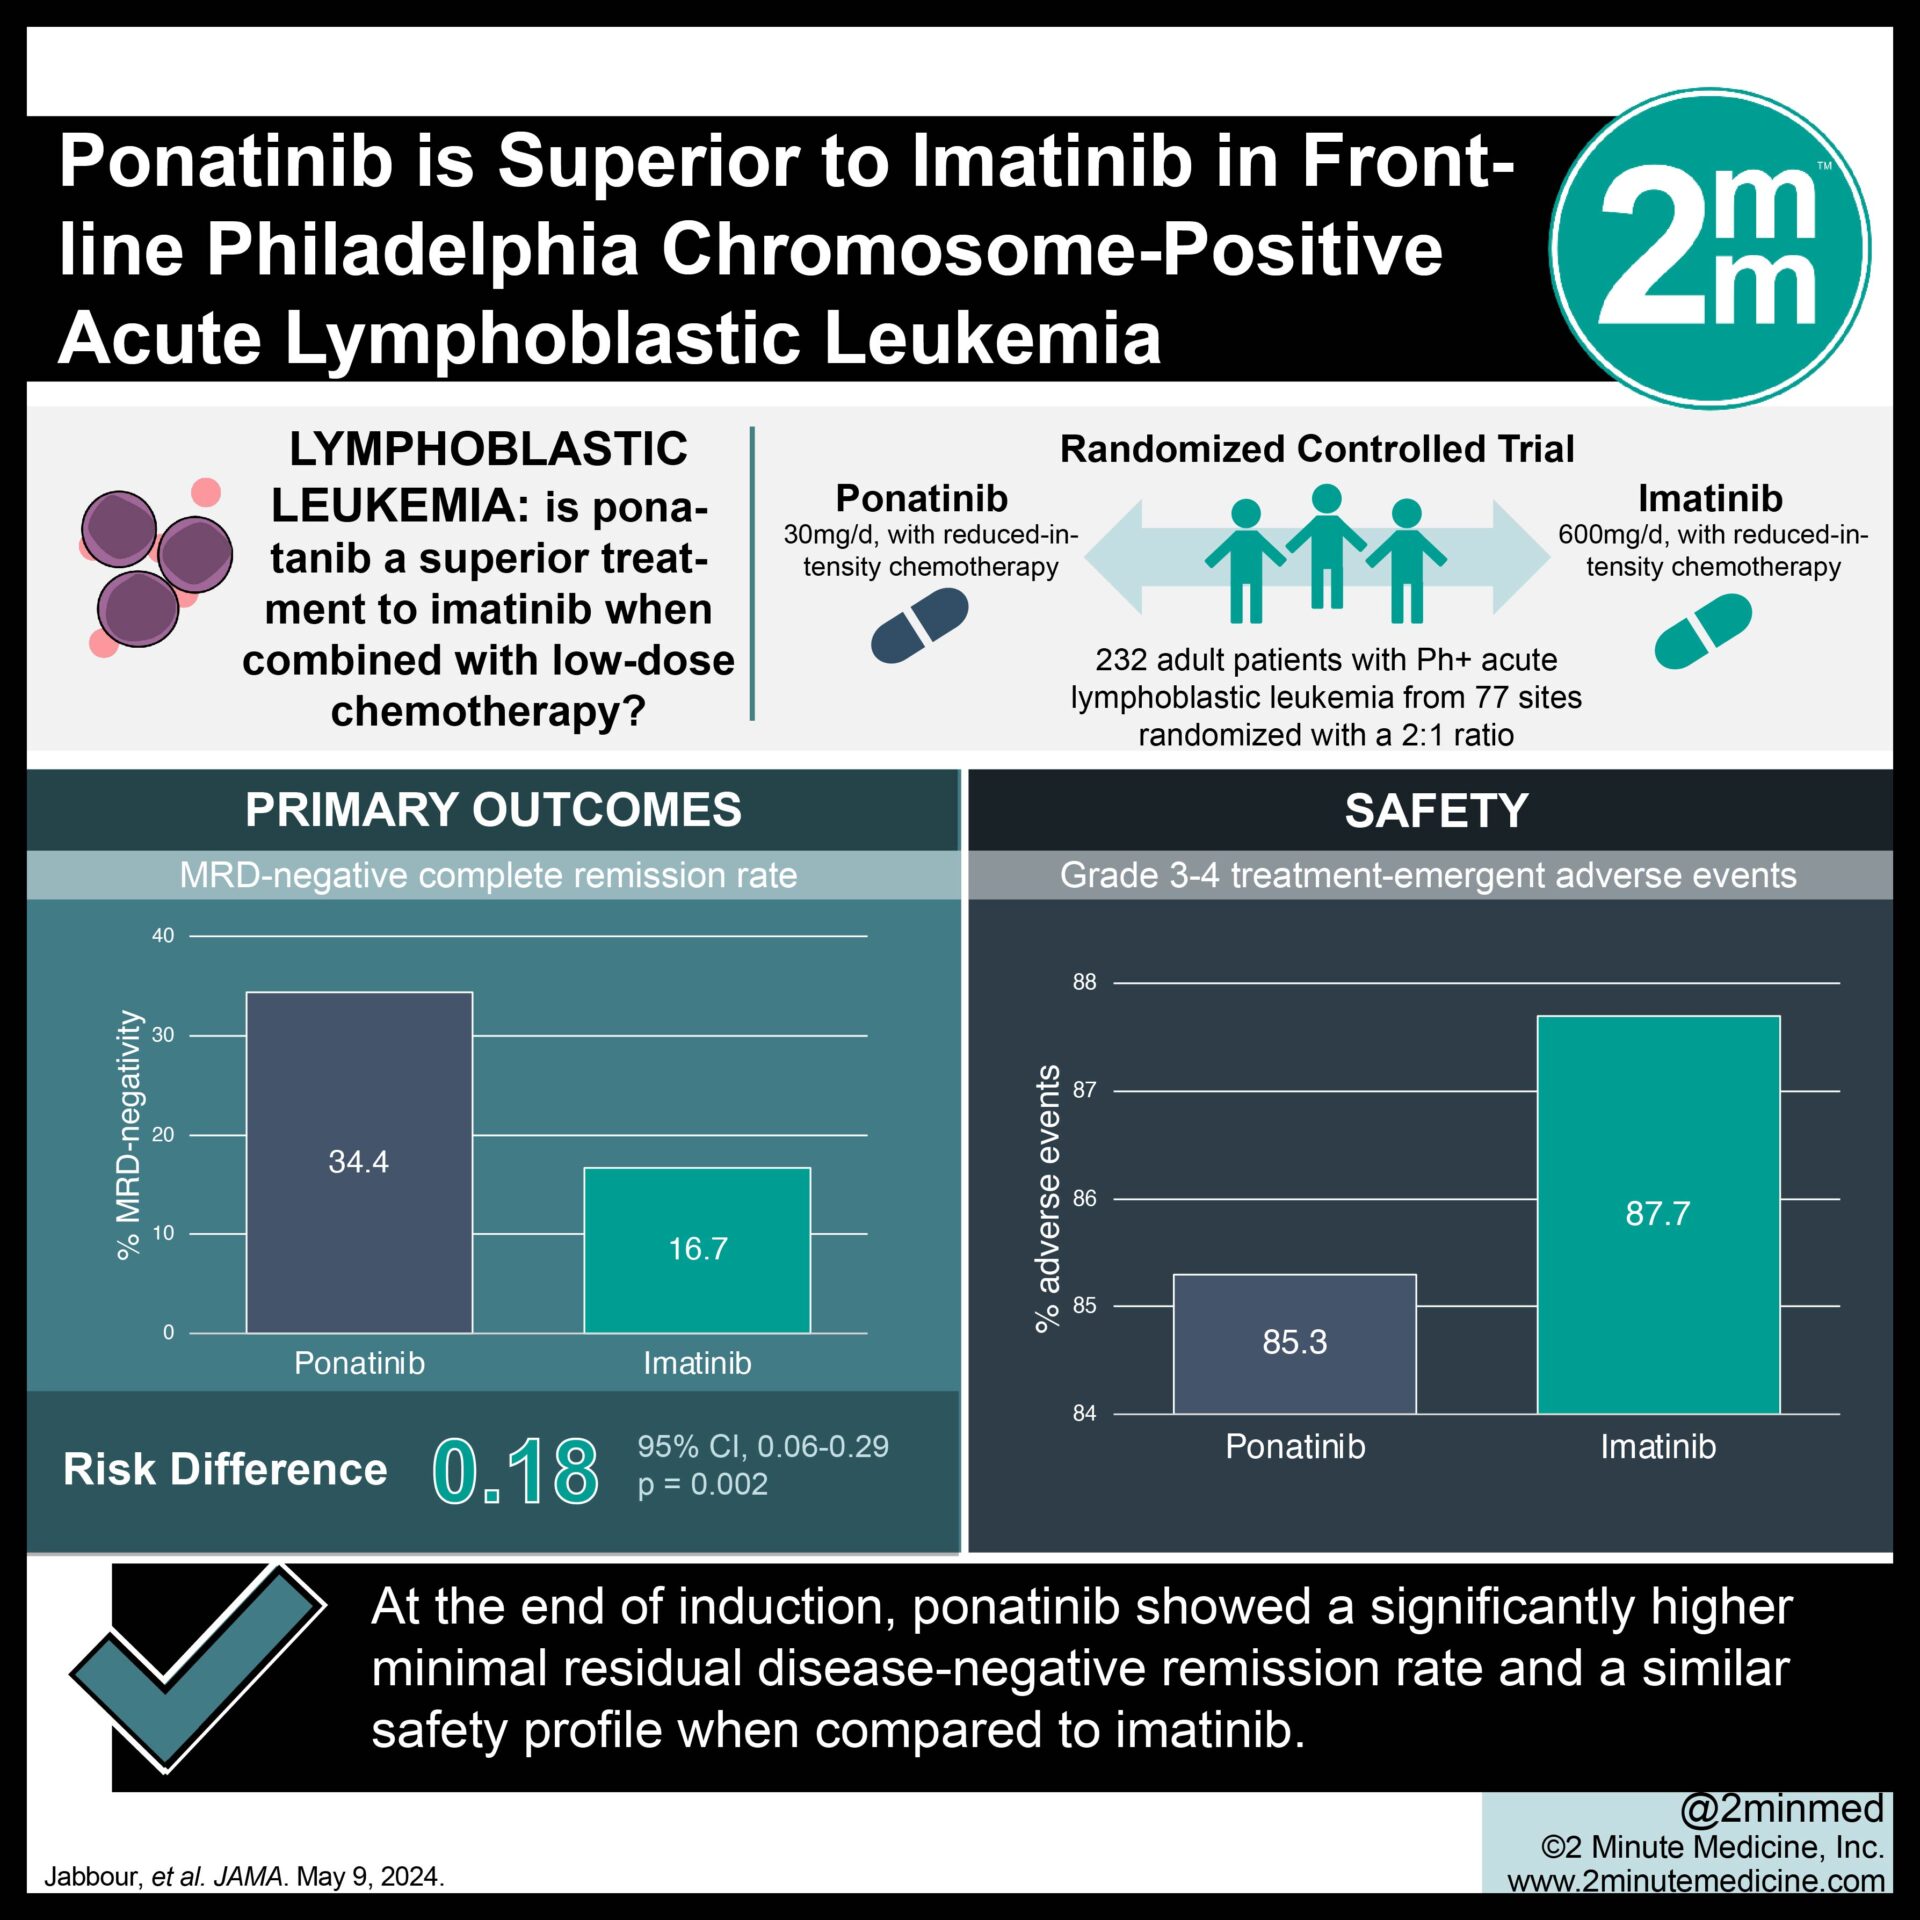 #VisualAbstract: Ponatinib is Superior to Imatinib in Frontline Philadelphia Chromosome-Positive Acute Lymphoblastic Leukemia